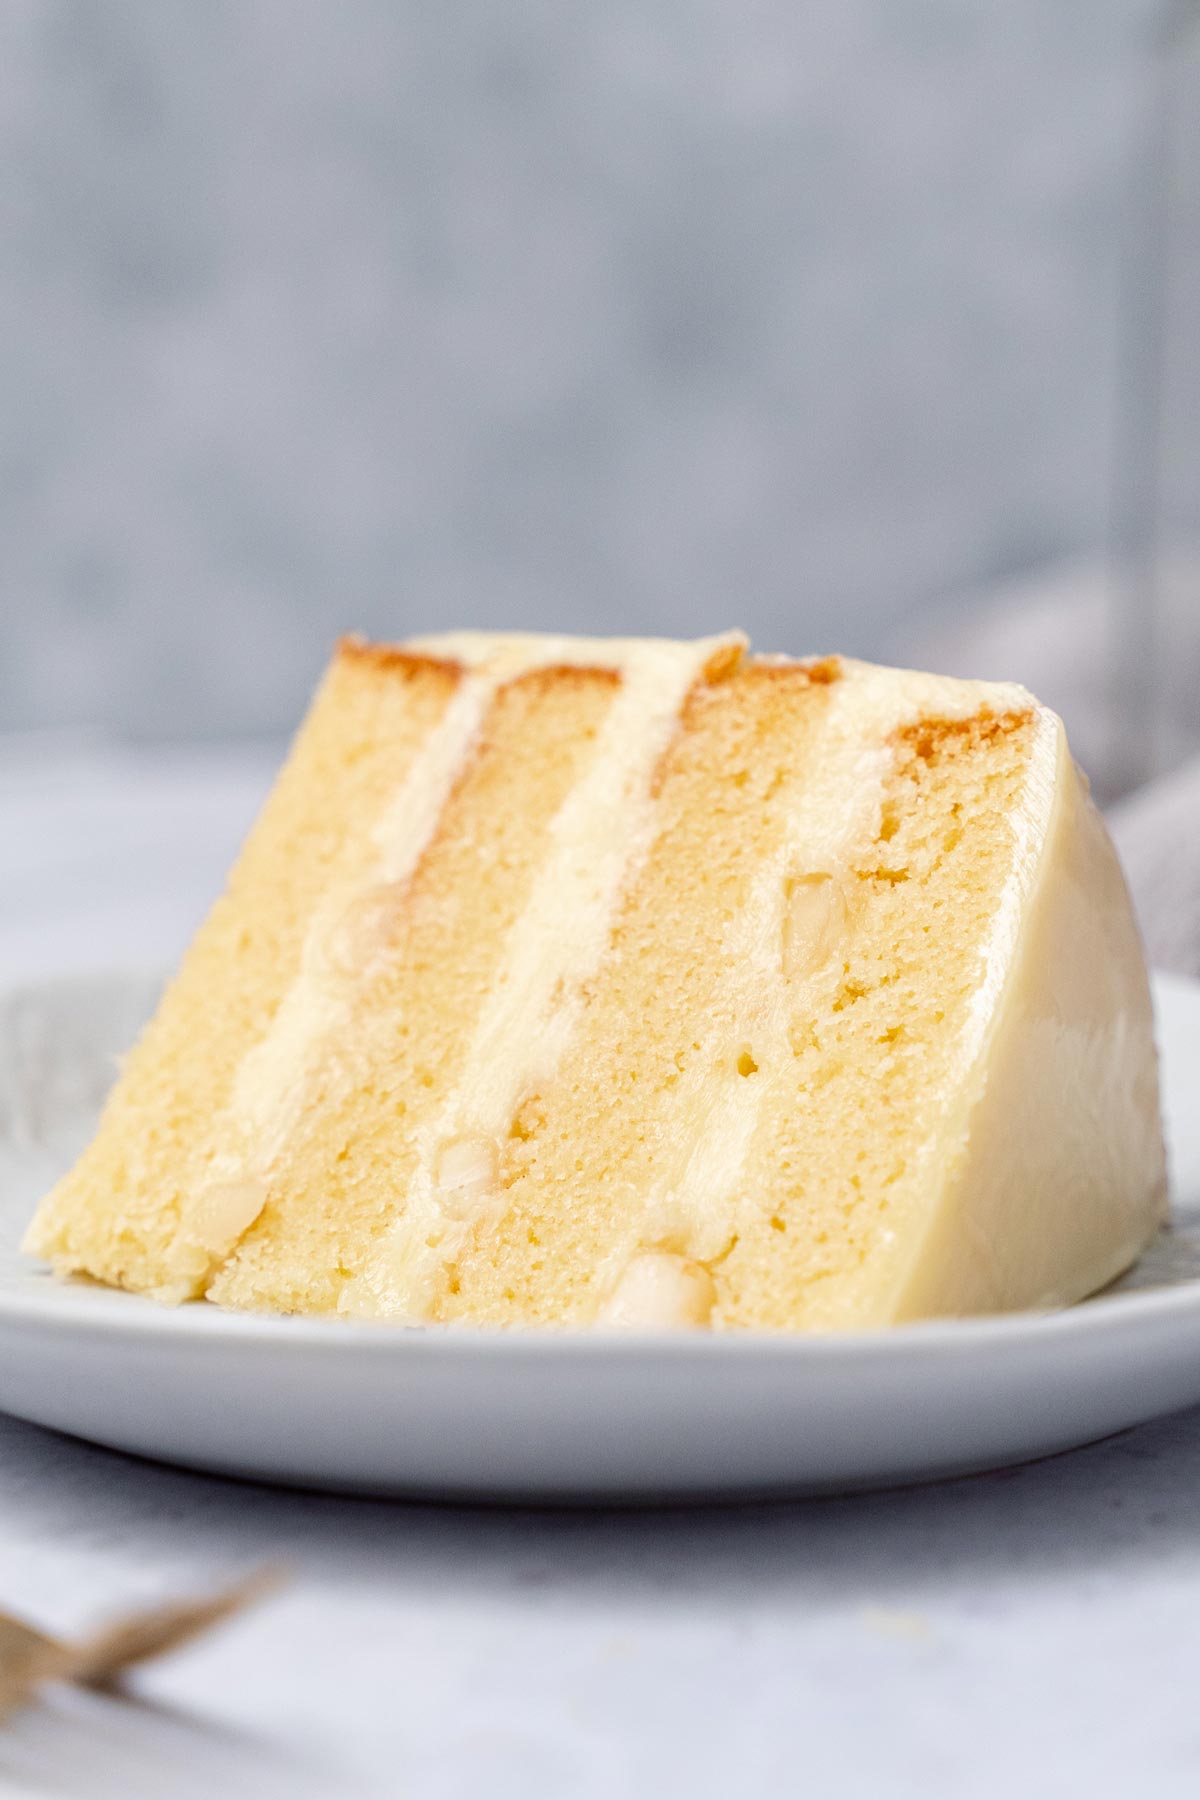 slice of cake with Swiss meringue buttercream filling